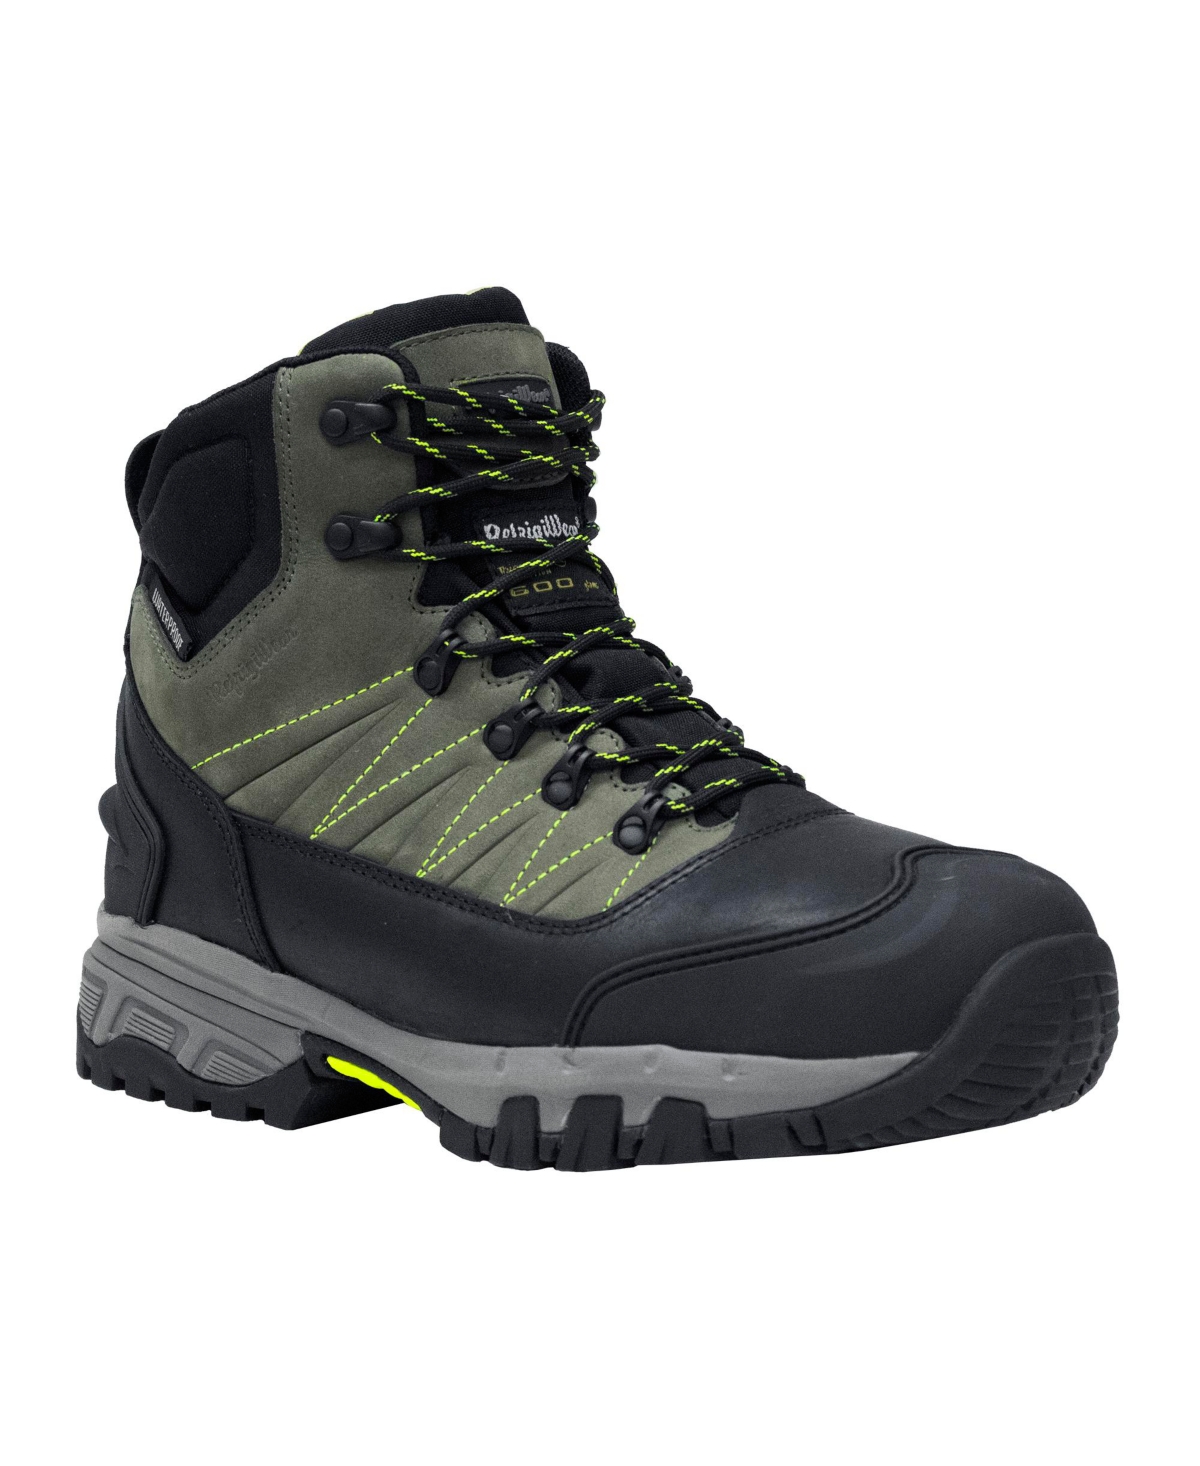 Men's Tungsten Hiker Warm Insulated Waterproof Leather Work Boots - Green